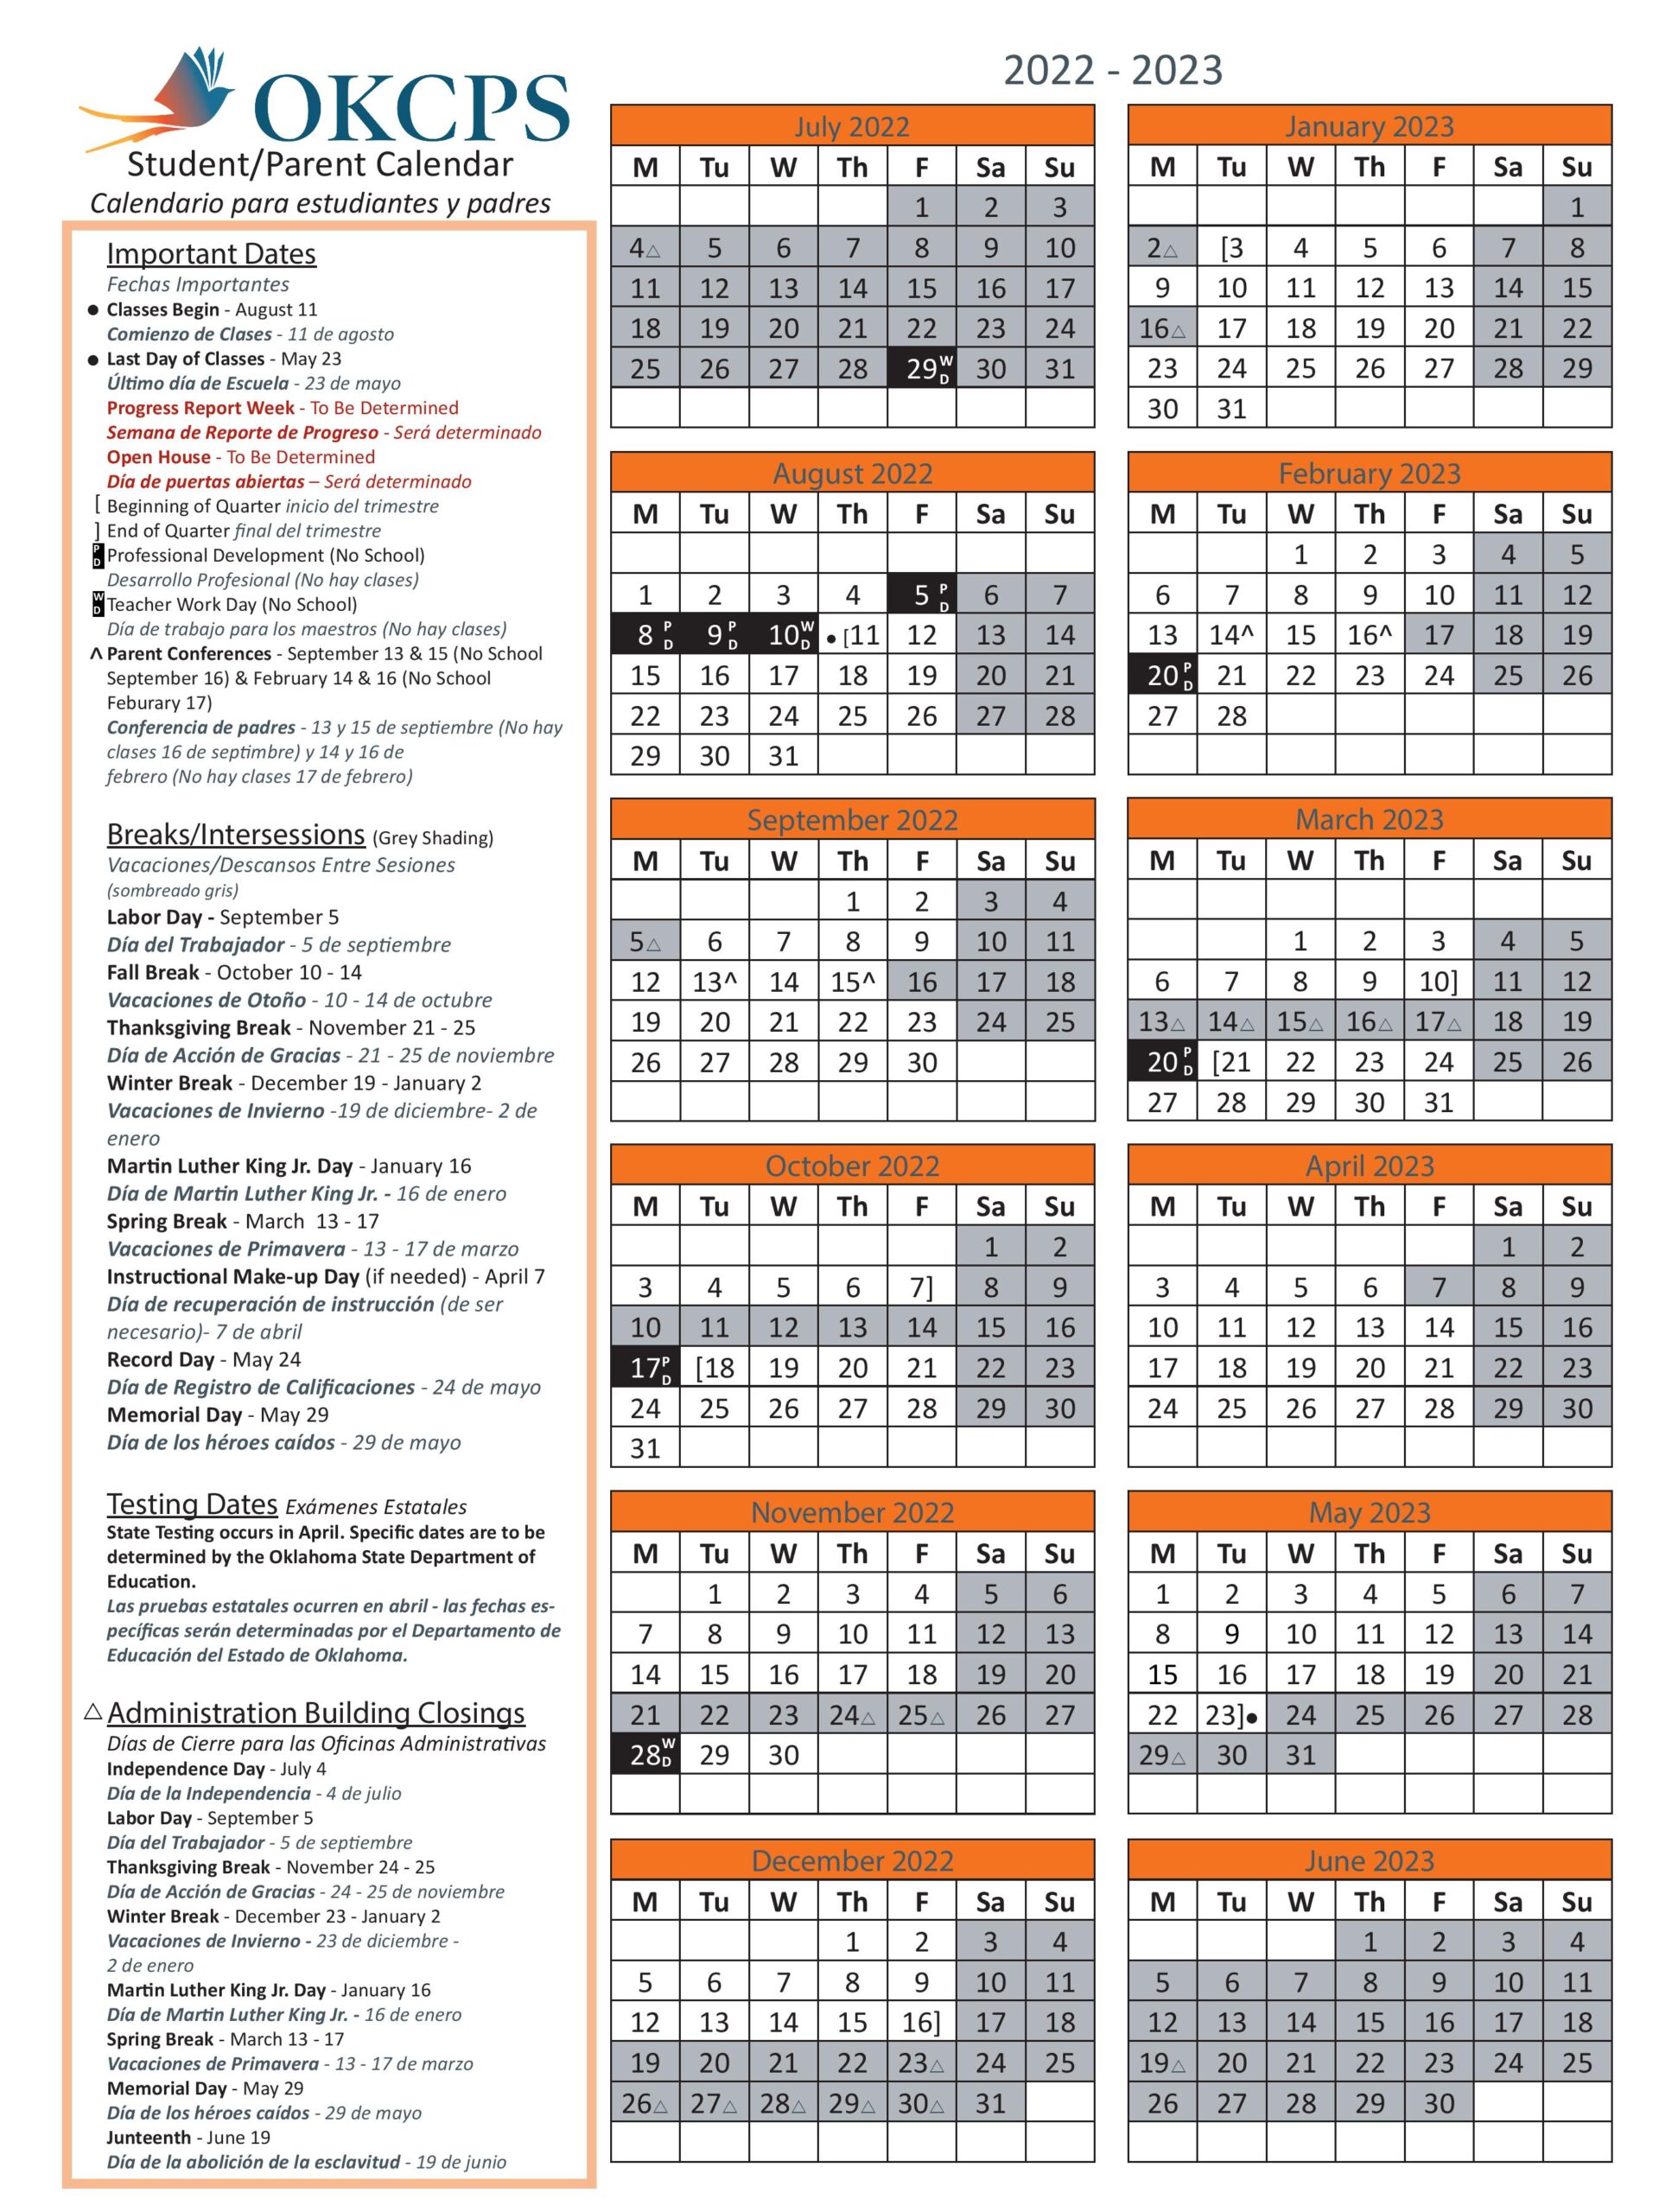 2025-2026-two-year-calendar-free-printable-pdf-templates